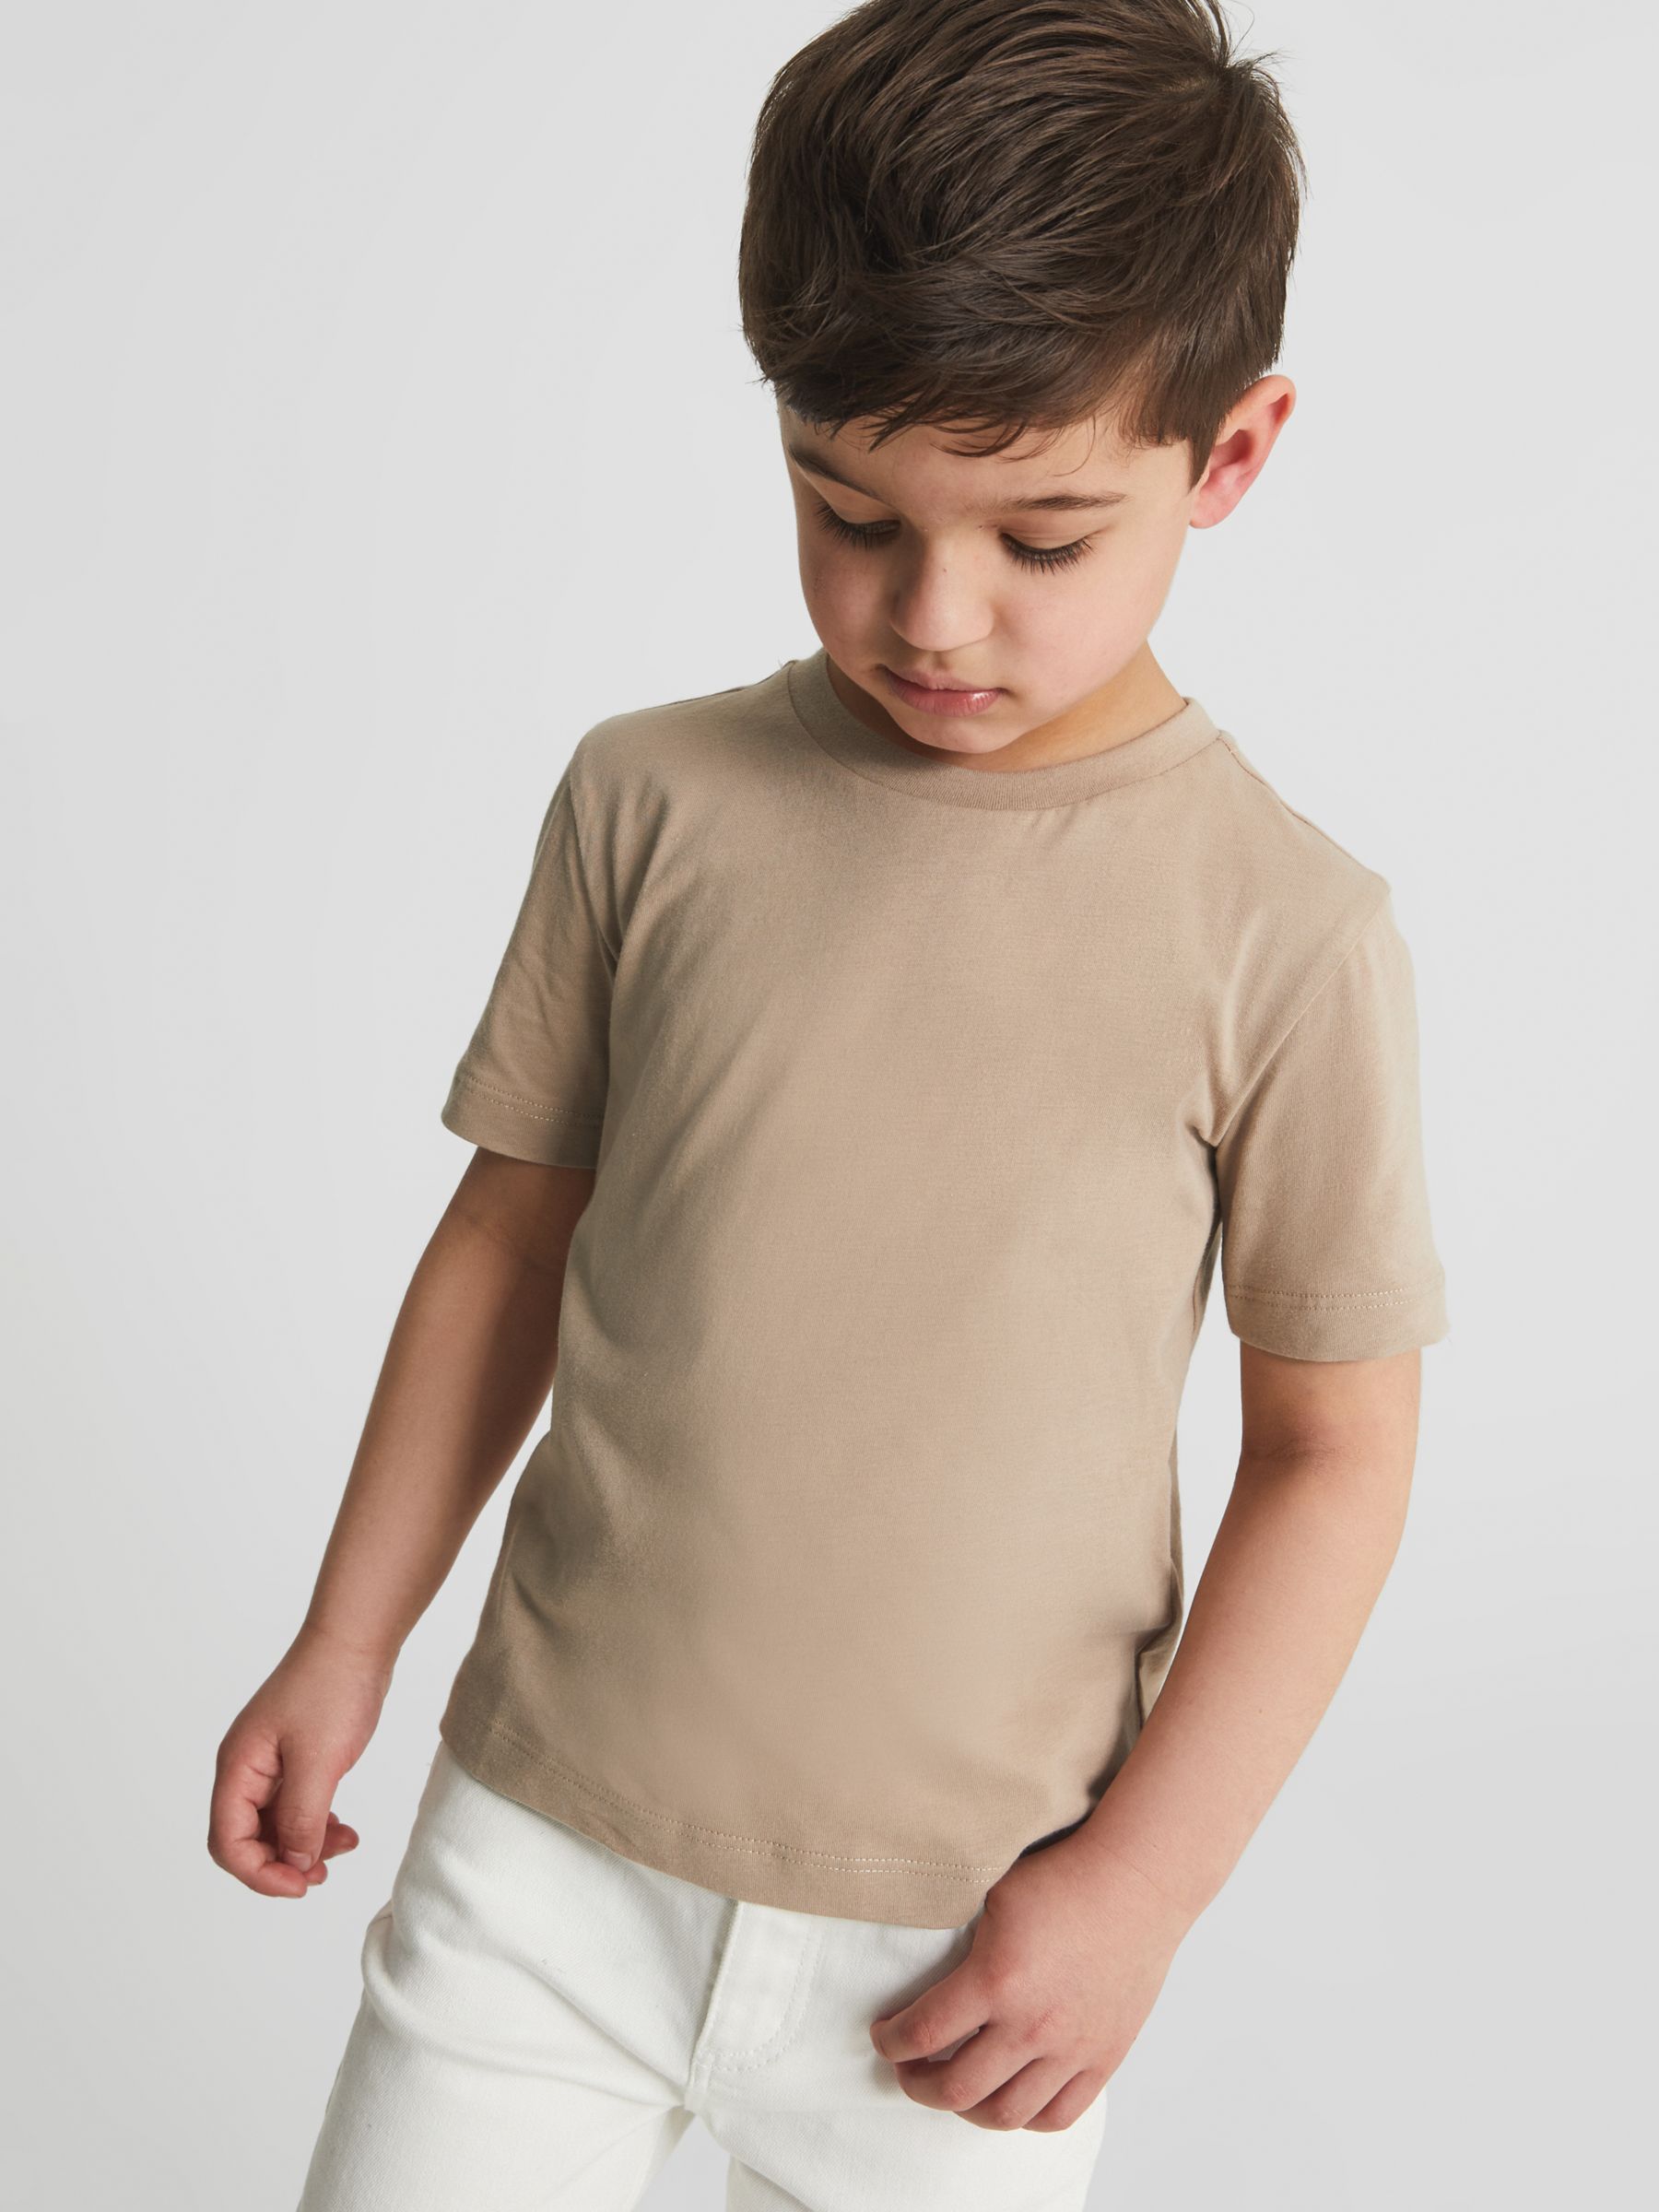 Детская футболка Bless с круглым вырезом Reiss, камень детская футболка bless с круглым вырезом reiss белый